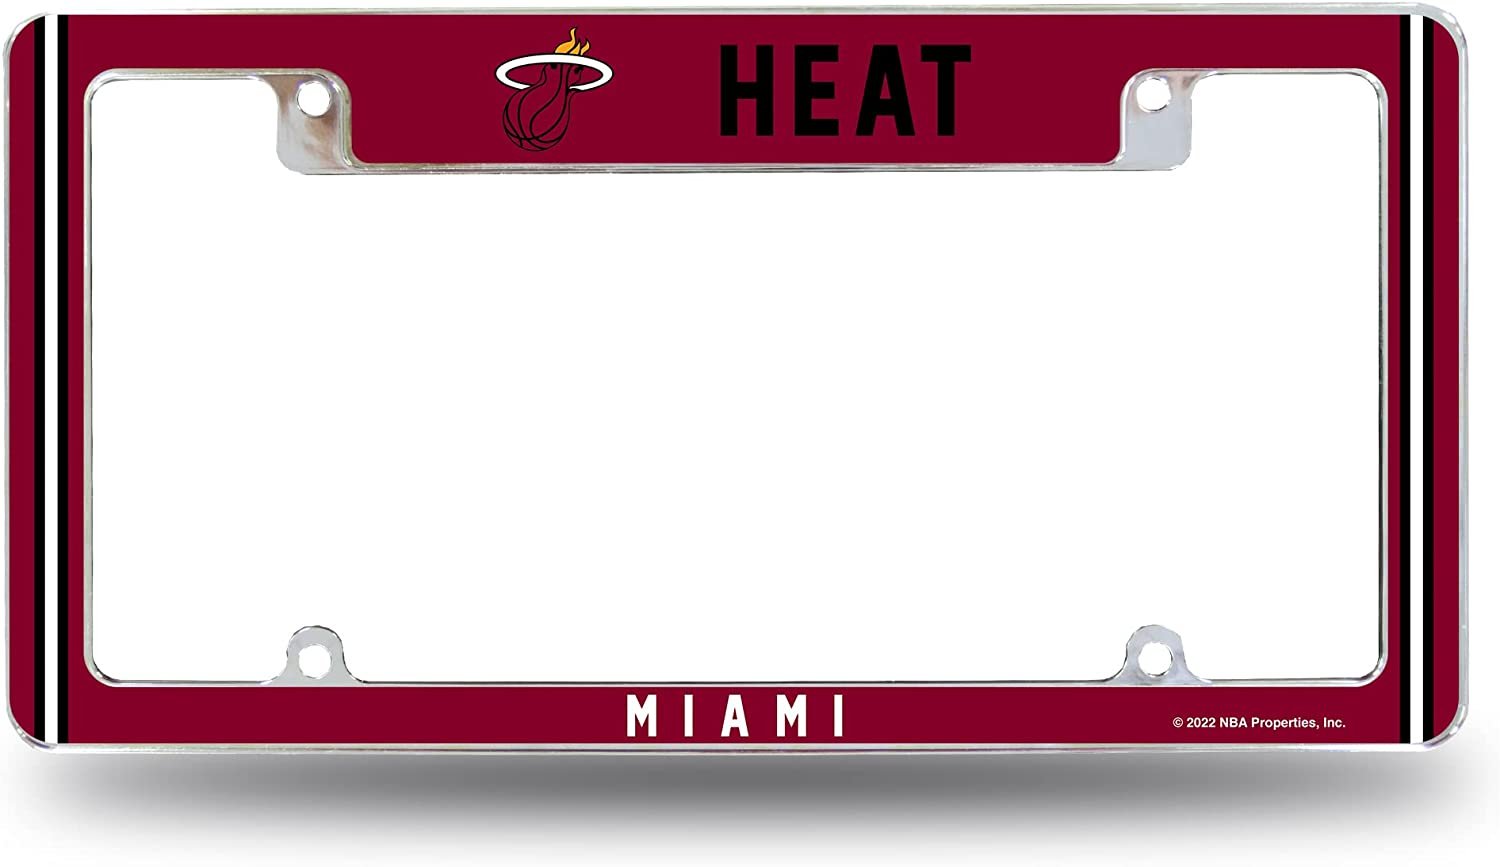 Miami Heat Metal License Plate Frame Chrome Tag Cover Alternate Design 6x12 Inch